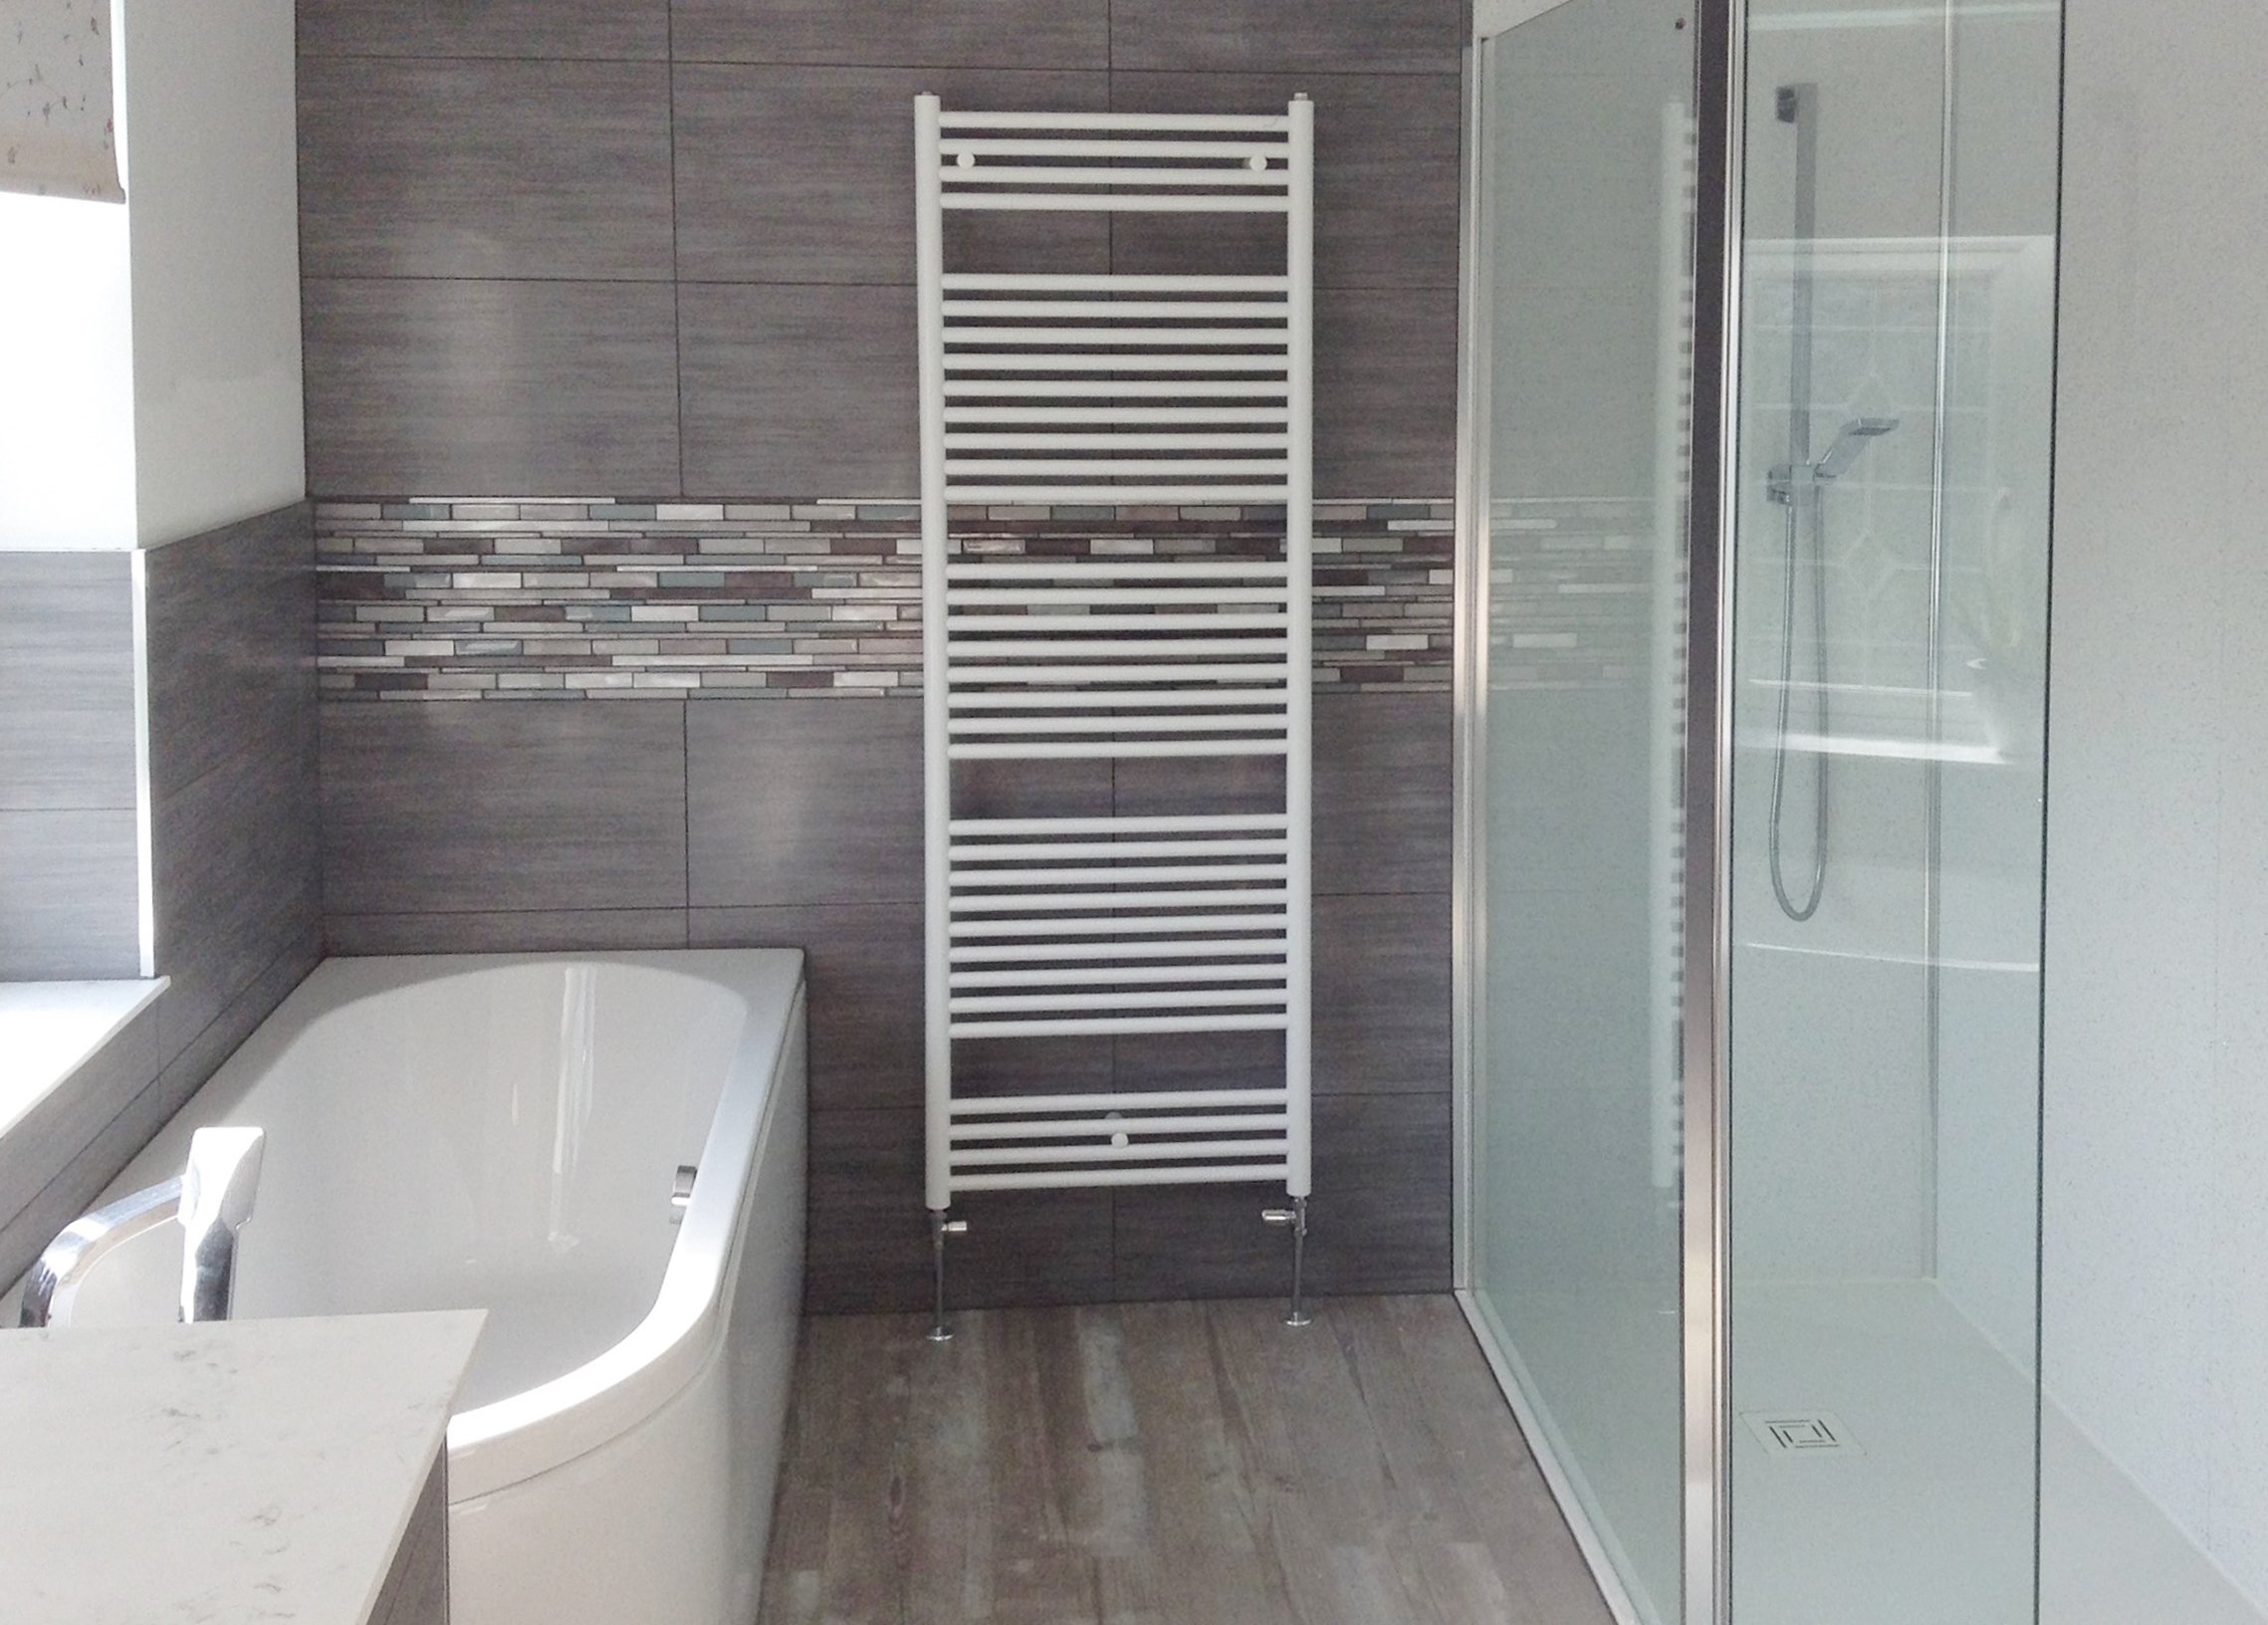 Bathroom Ideas - grey bathroom with statement tile